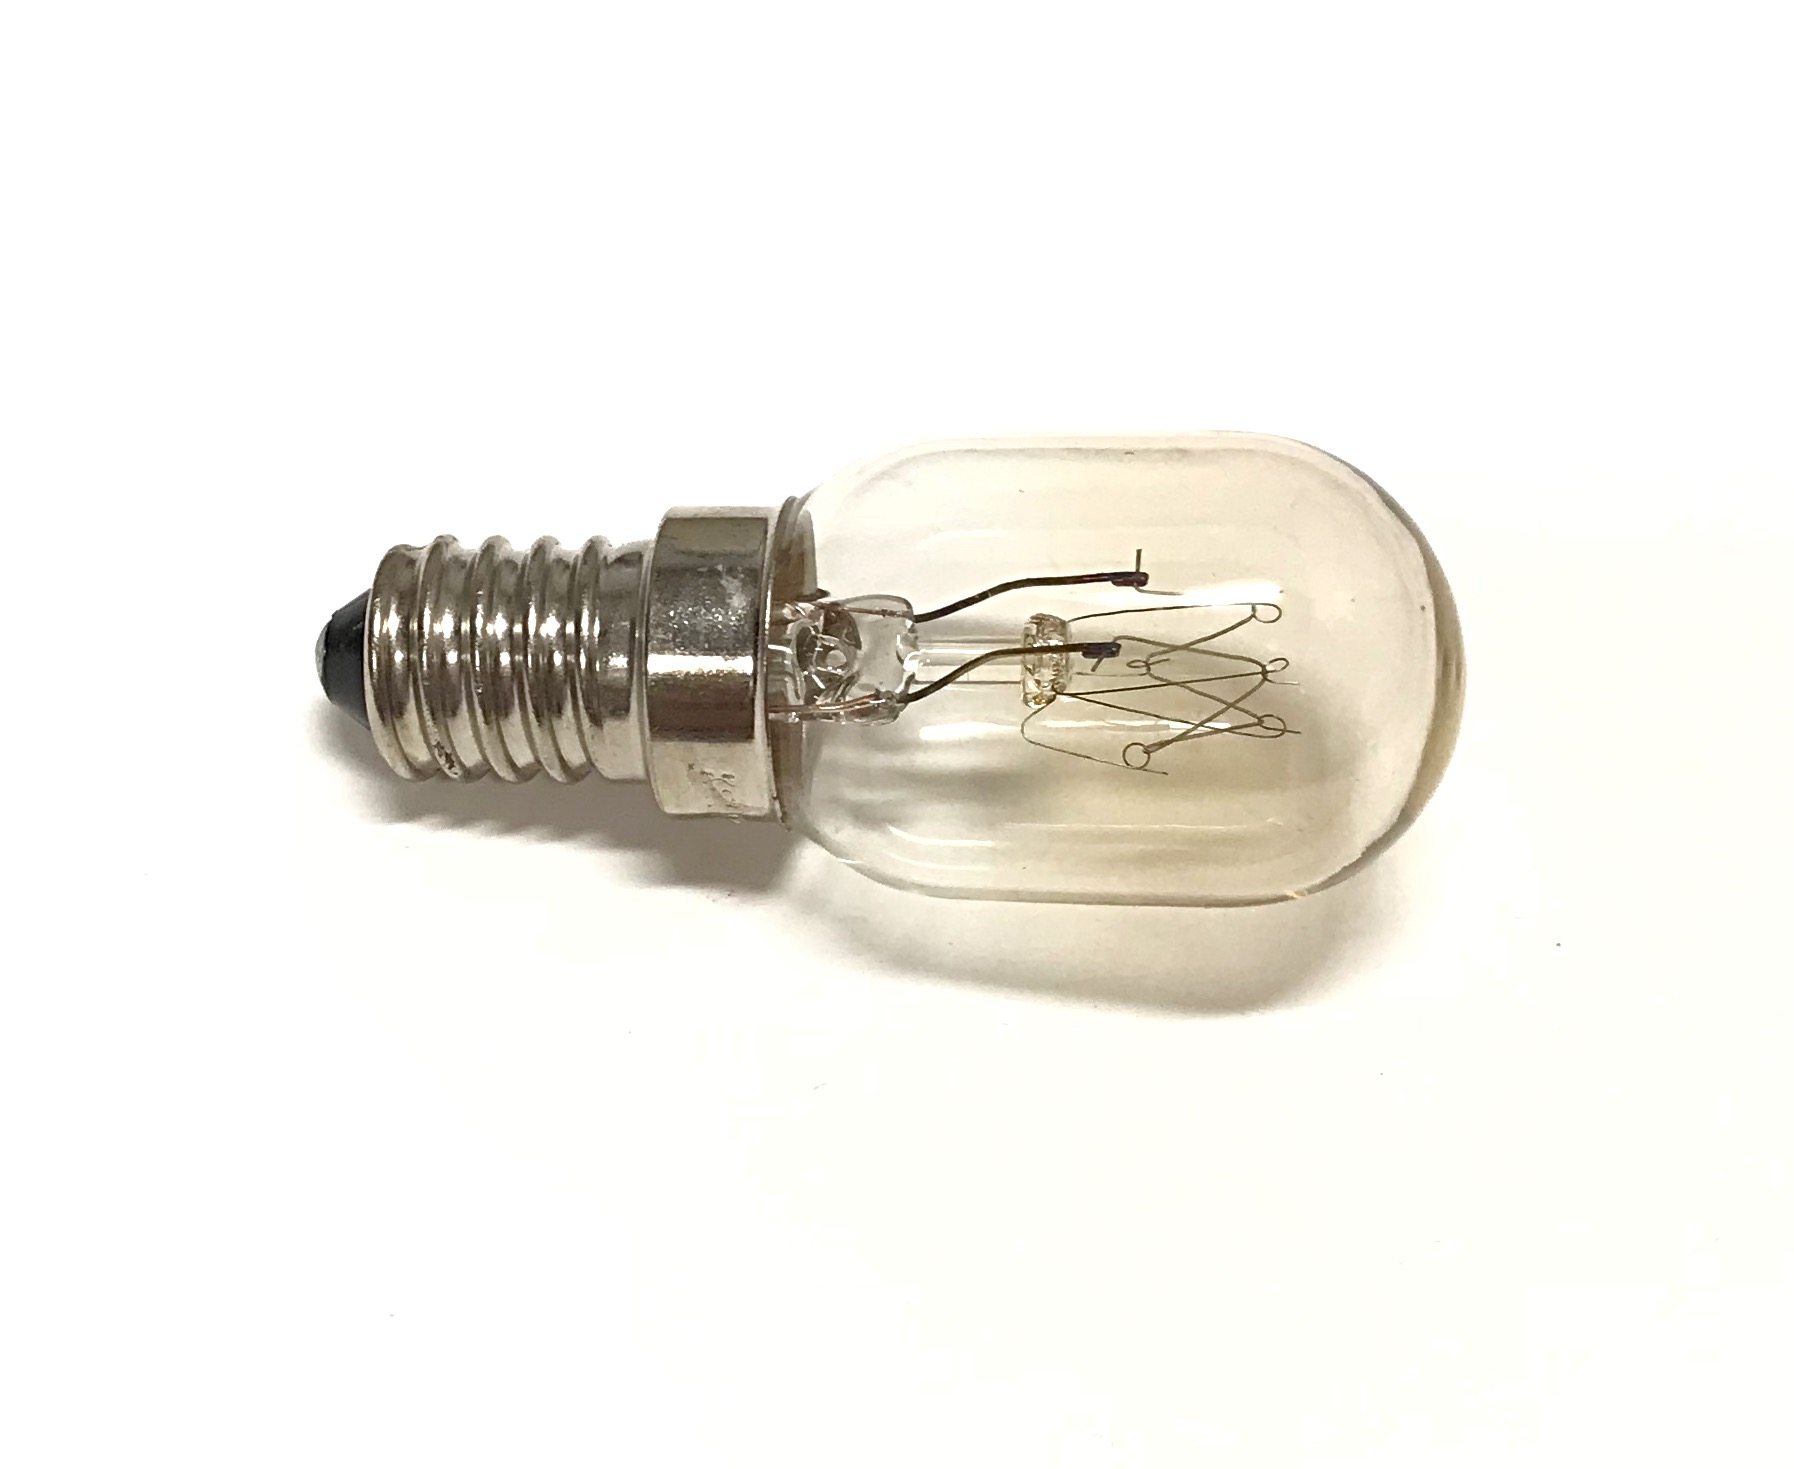 OEM LG Refrigerator Water Ice Dispenser Light Bulb Lamp Originally Shipped With GRL267BSPA, GML277USRY, GML267BVRA - image 1 of 1